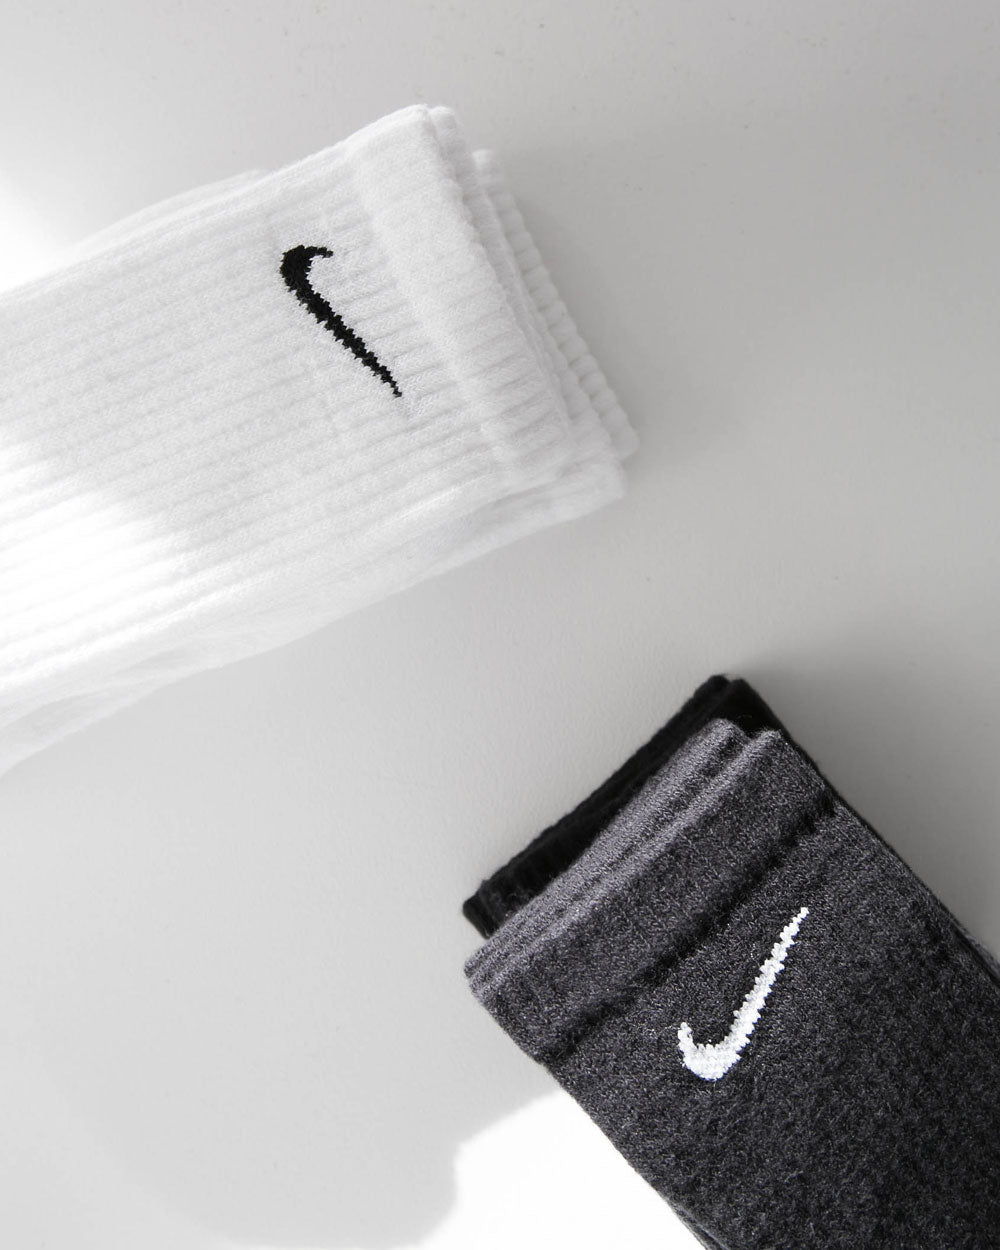 Nike Everyday Cushioned Crew Socks 3 Pack Black/White SX7664-010